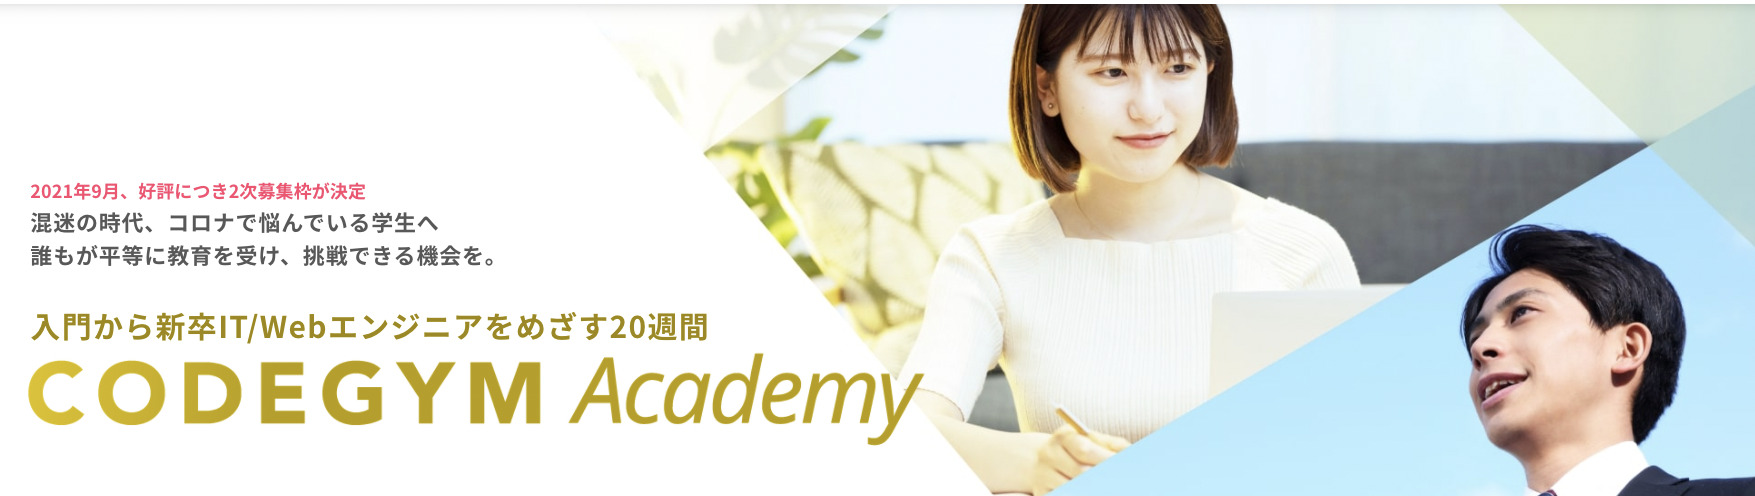 codegym-academy